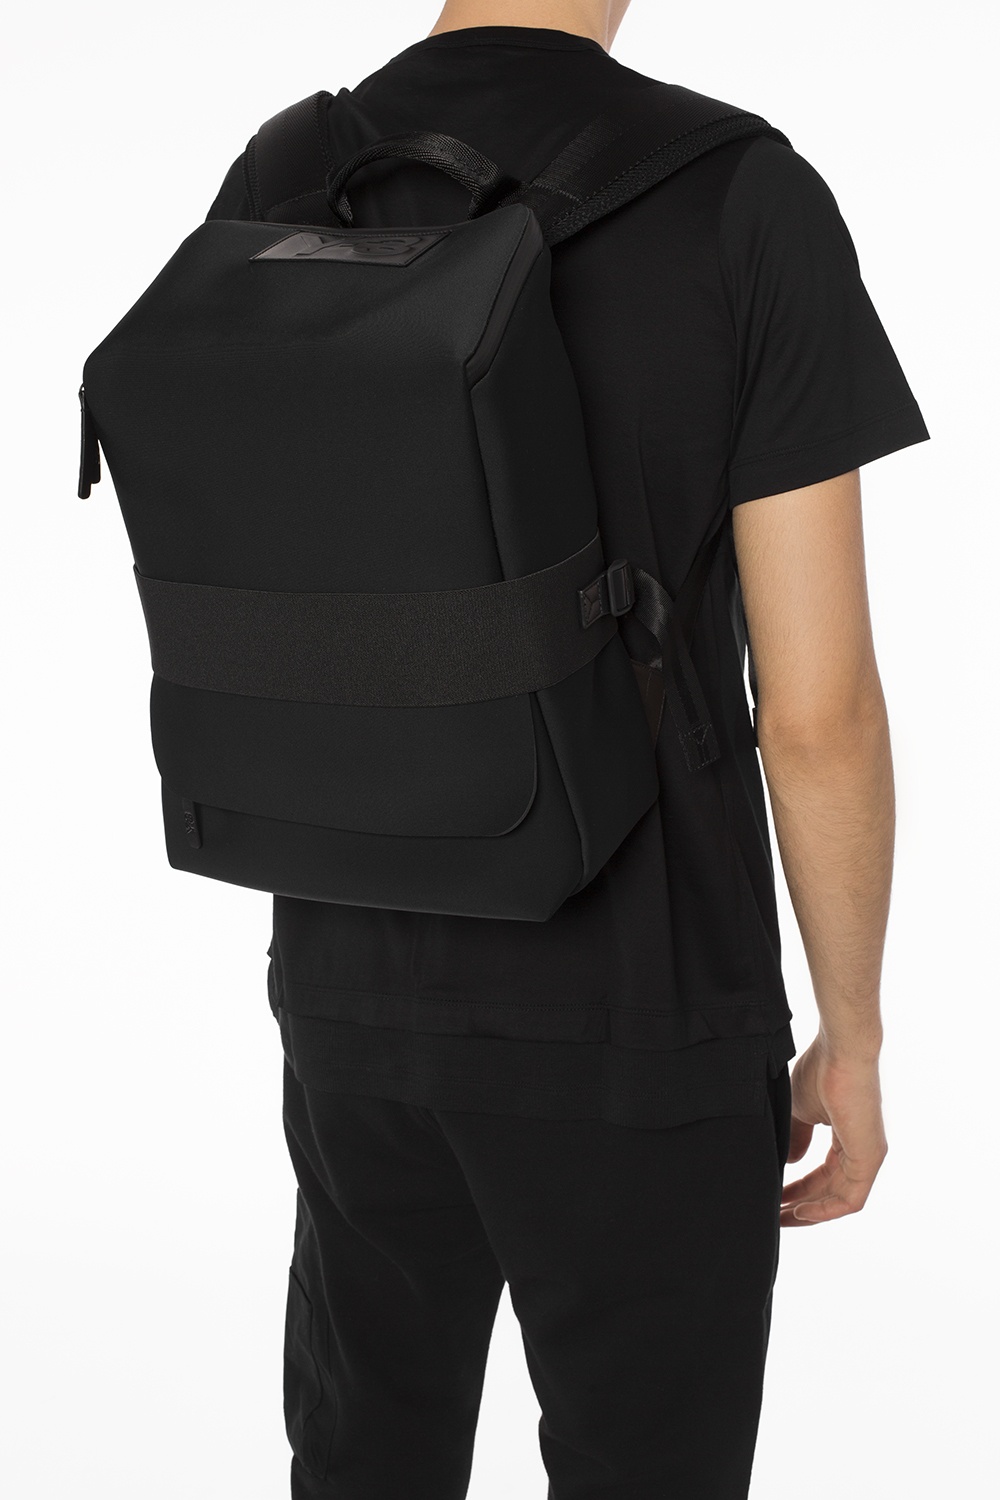 Y-3 QASA Backpack バックパック - ファッション